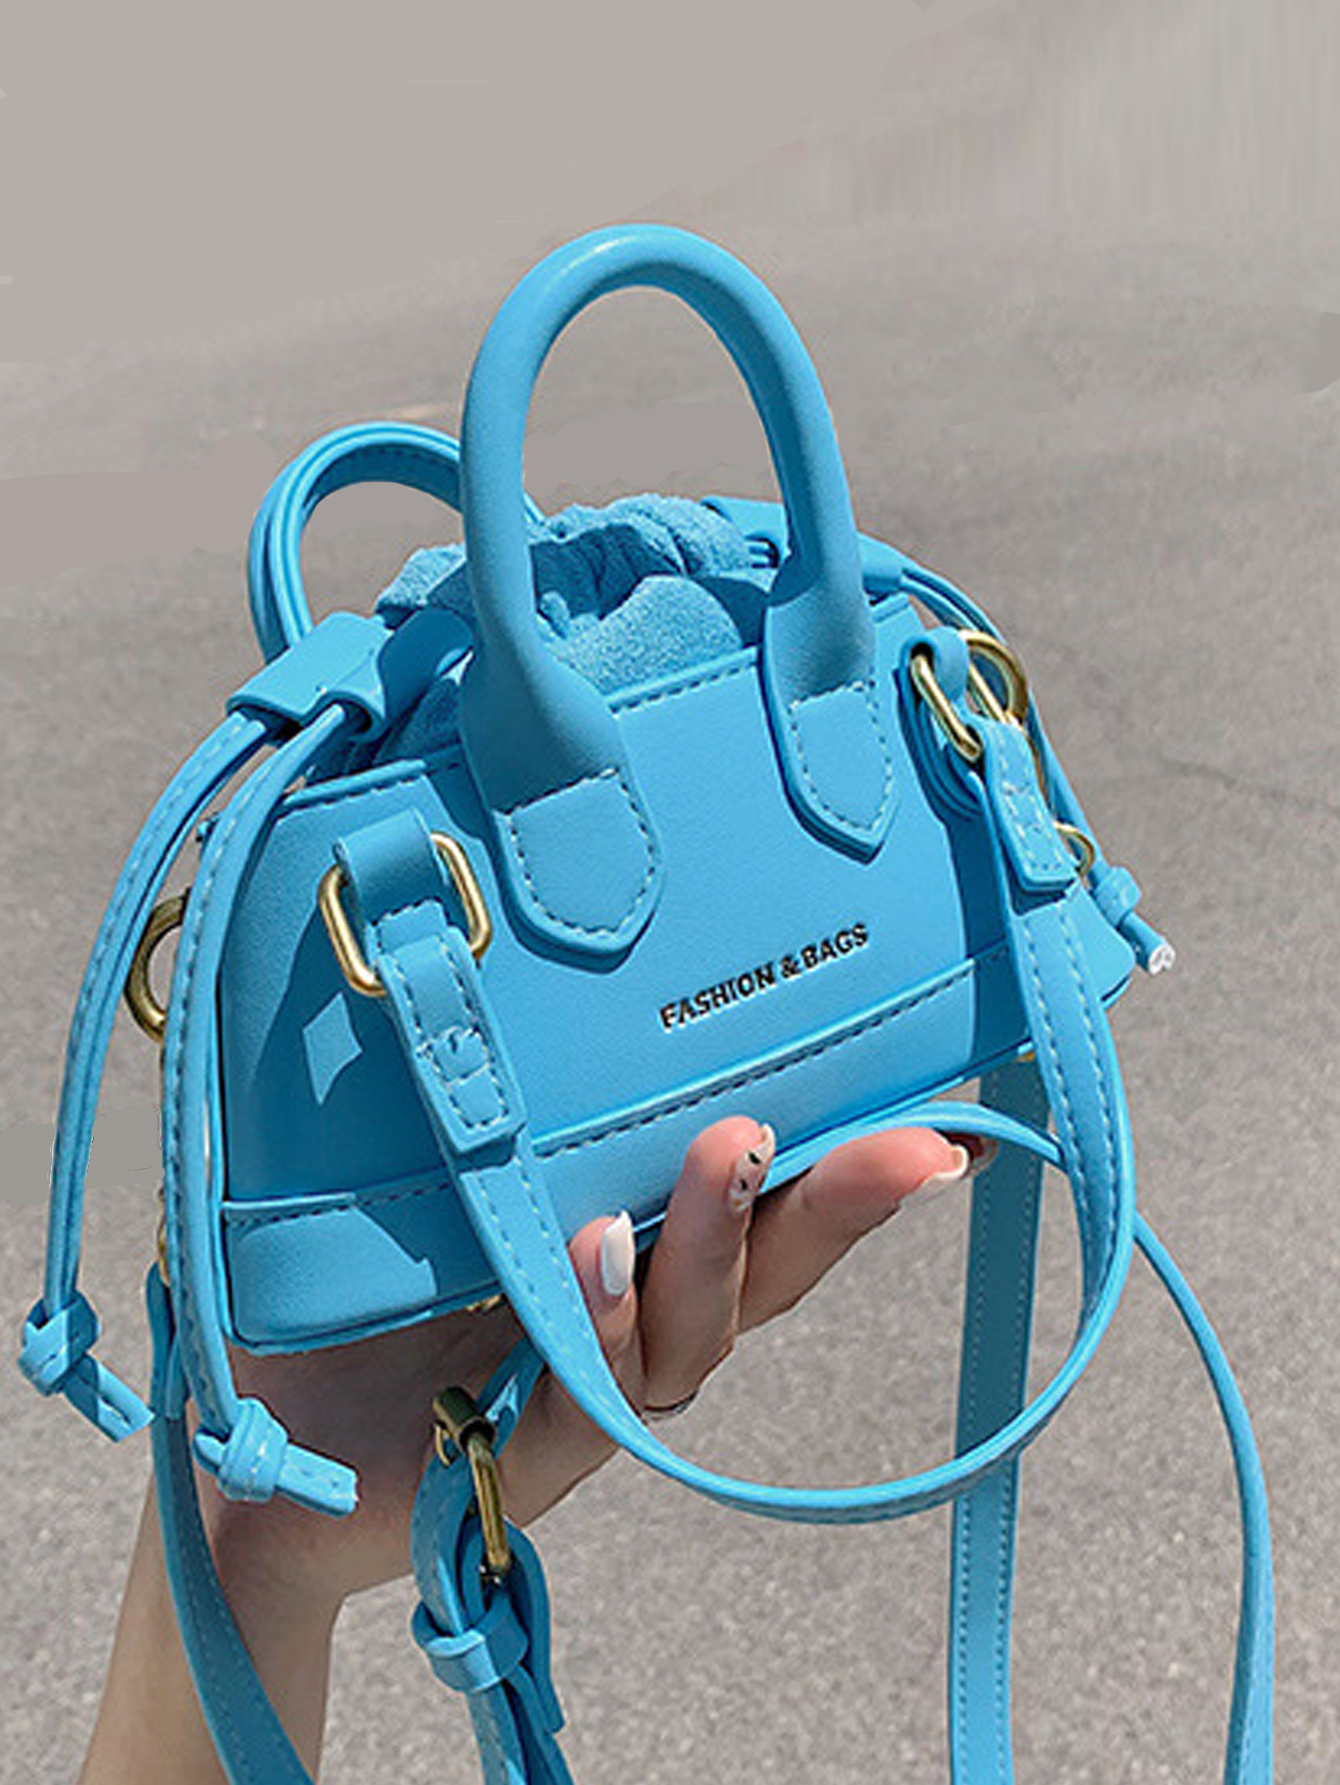 Monae Bag Blue